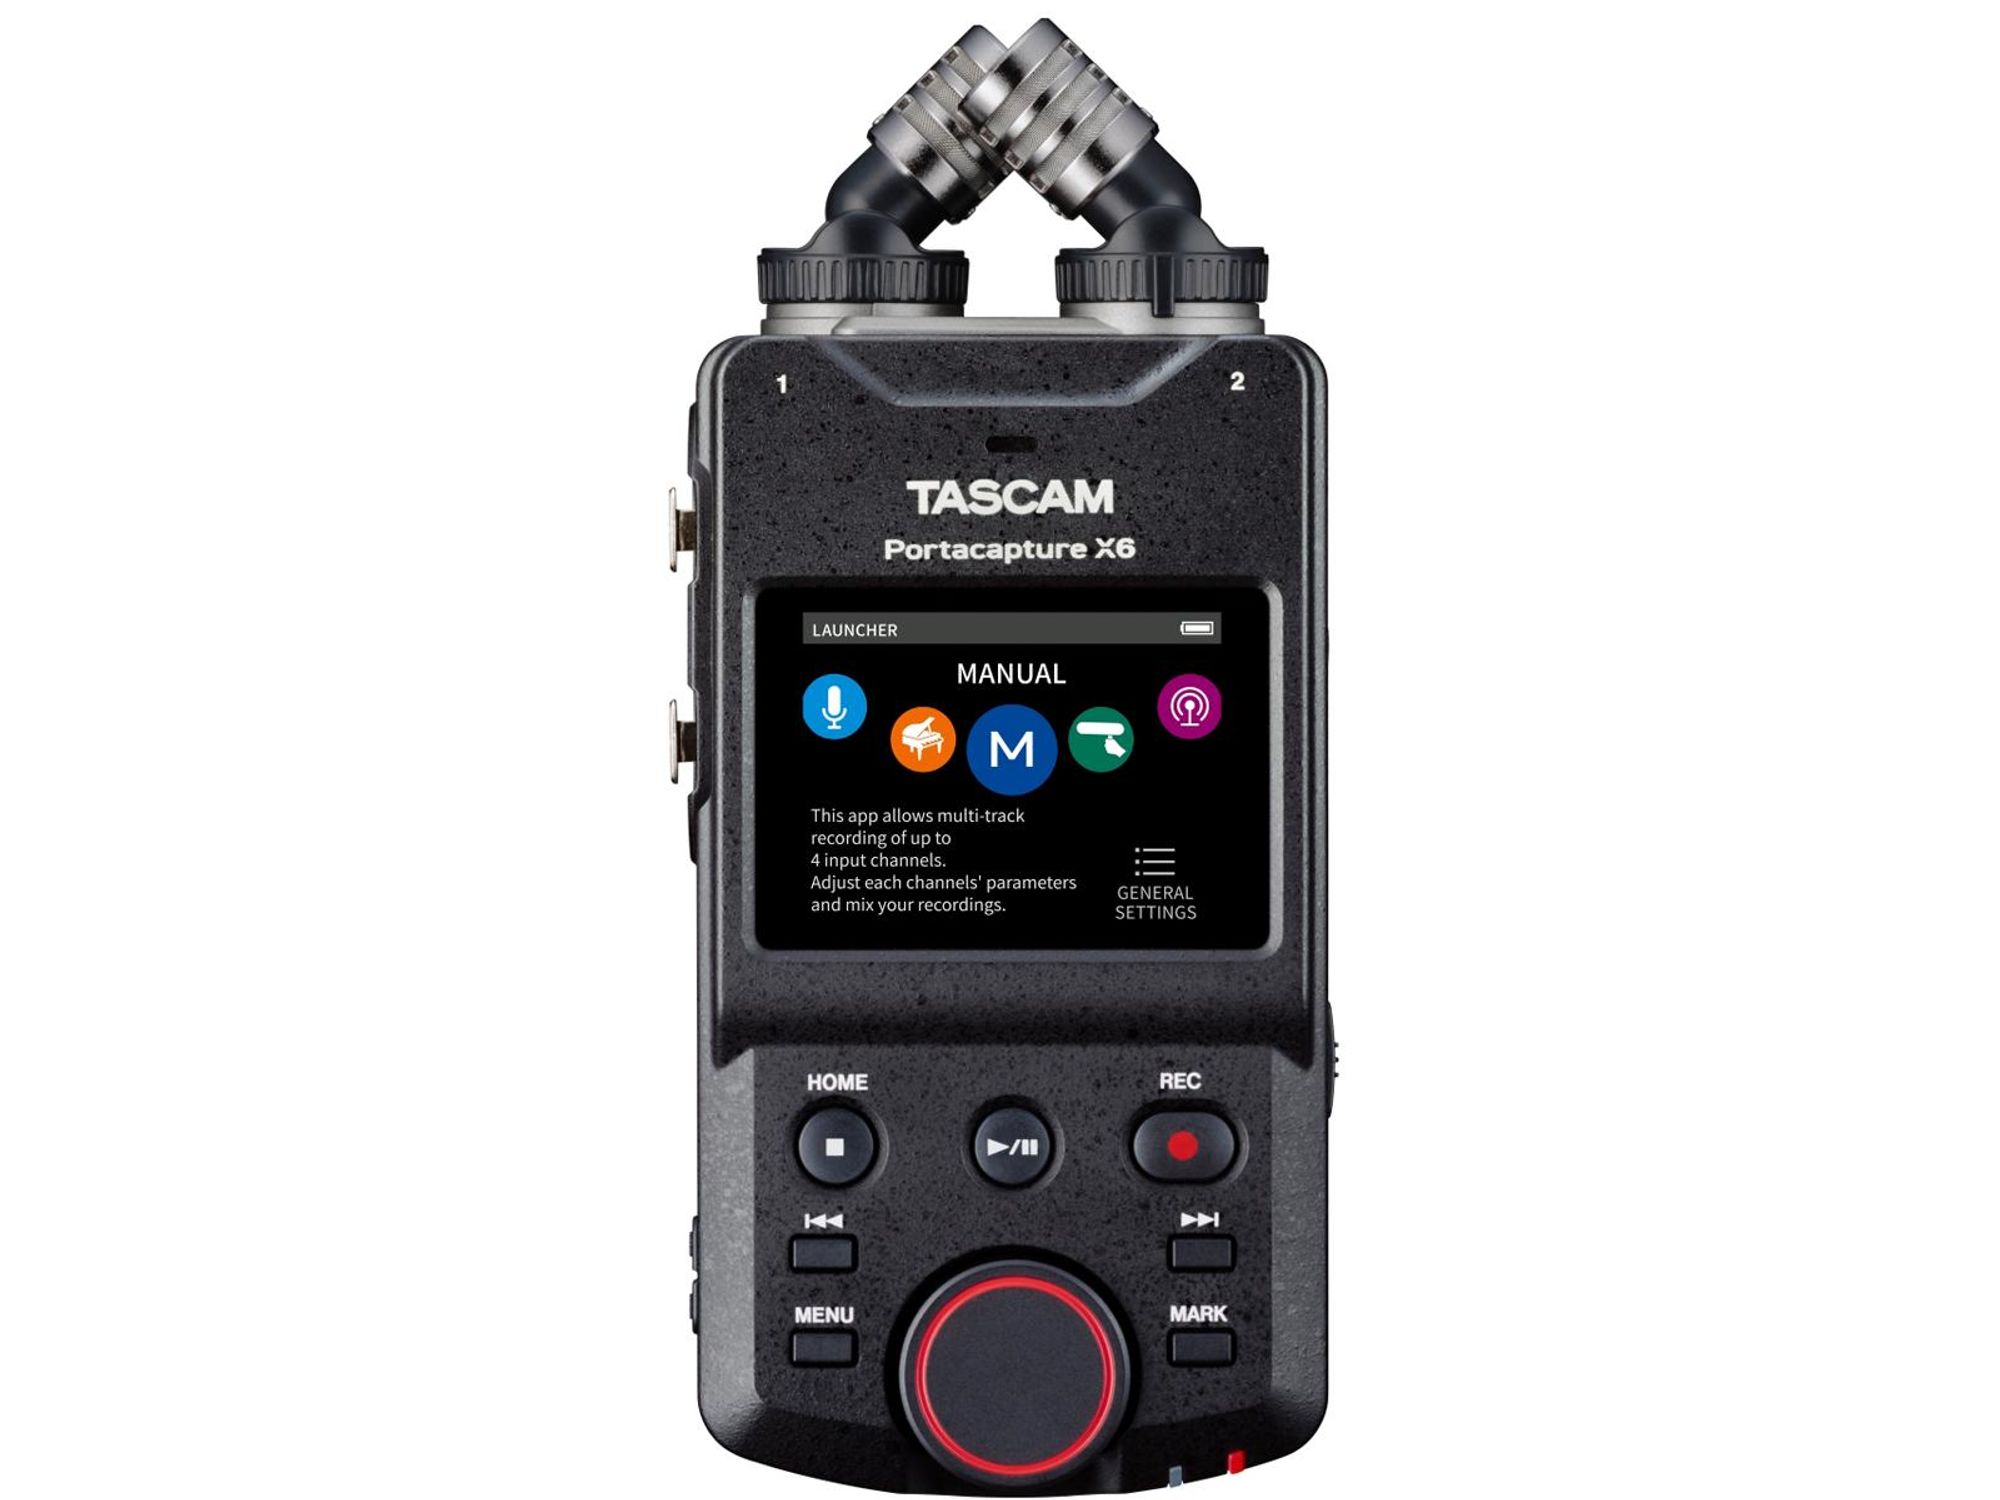 TASCAM AK-BT1 Bluetooth Adapter for Portacapture X6/X8 and